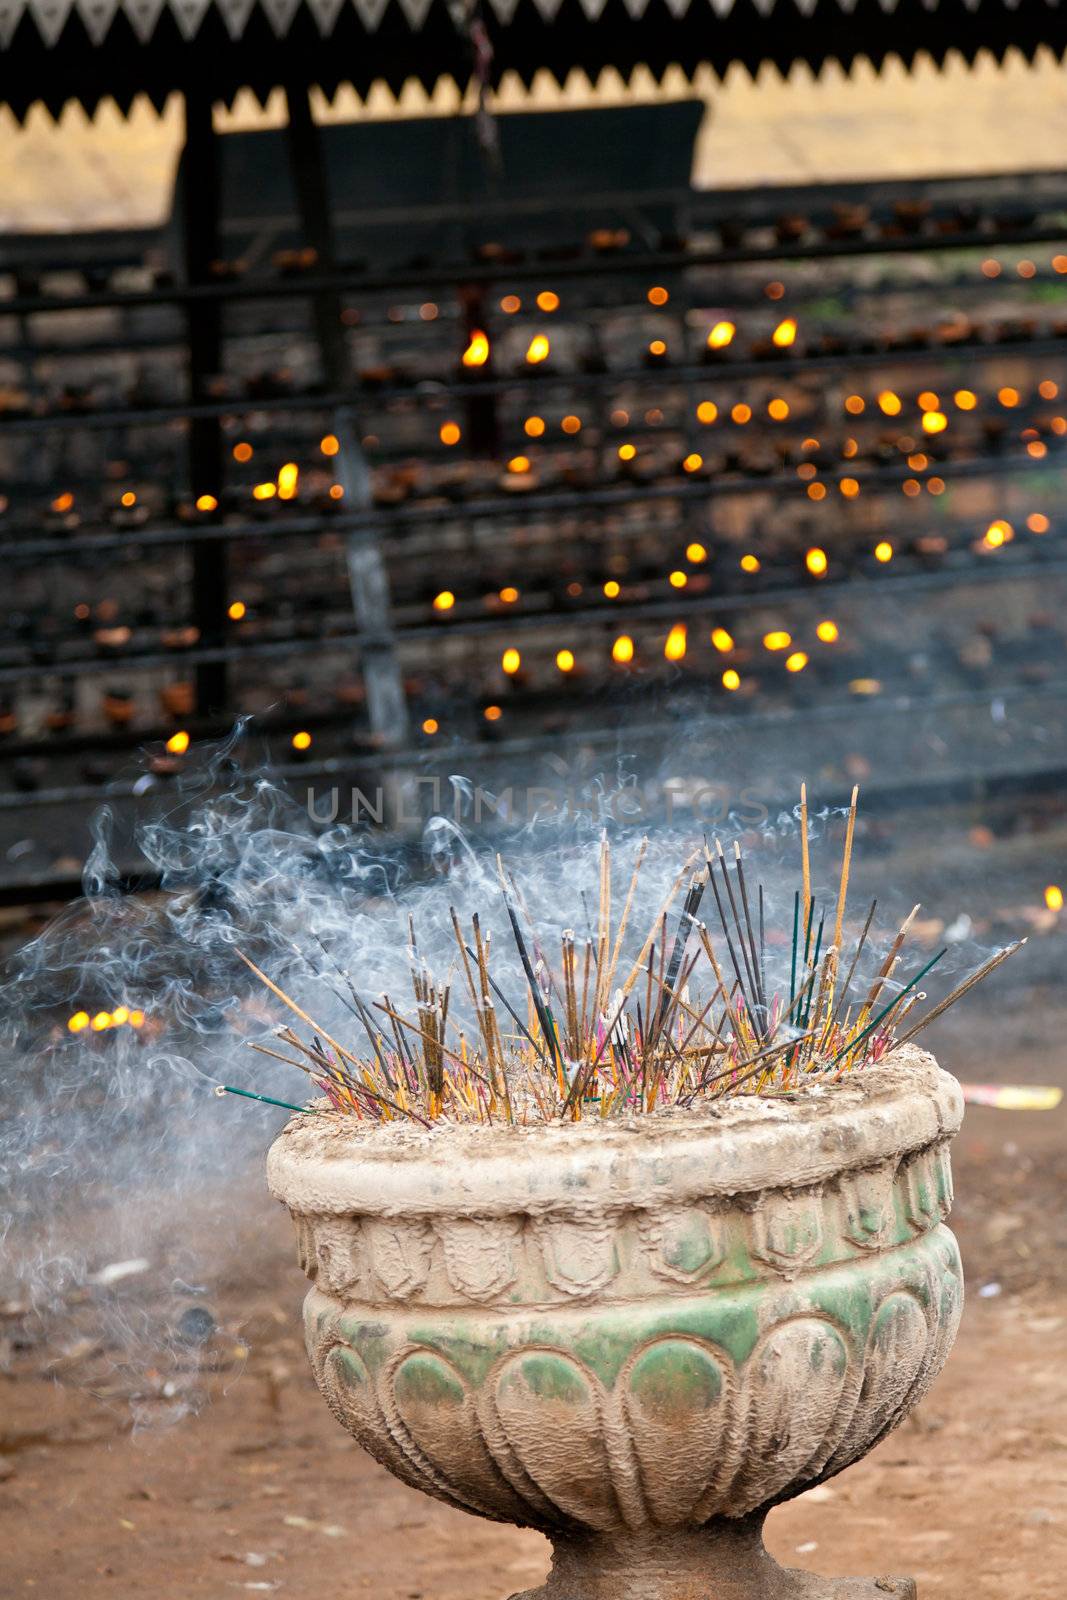 Burning incense sticks in a buddhist temple in Sri Lanka